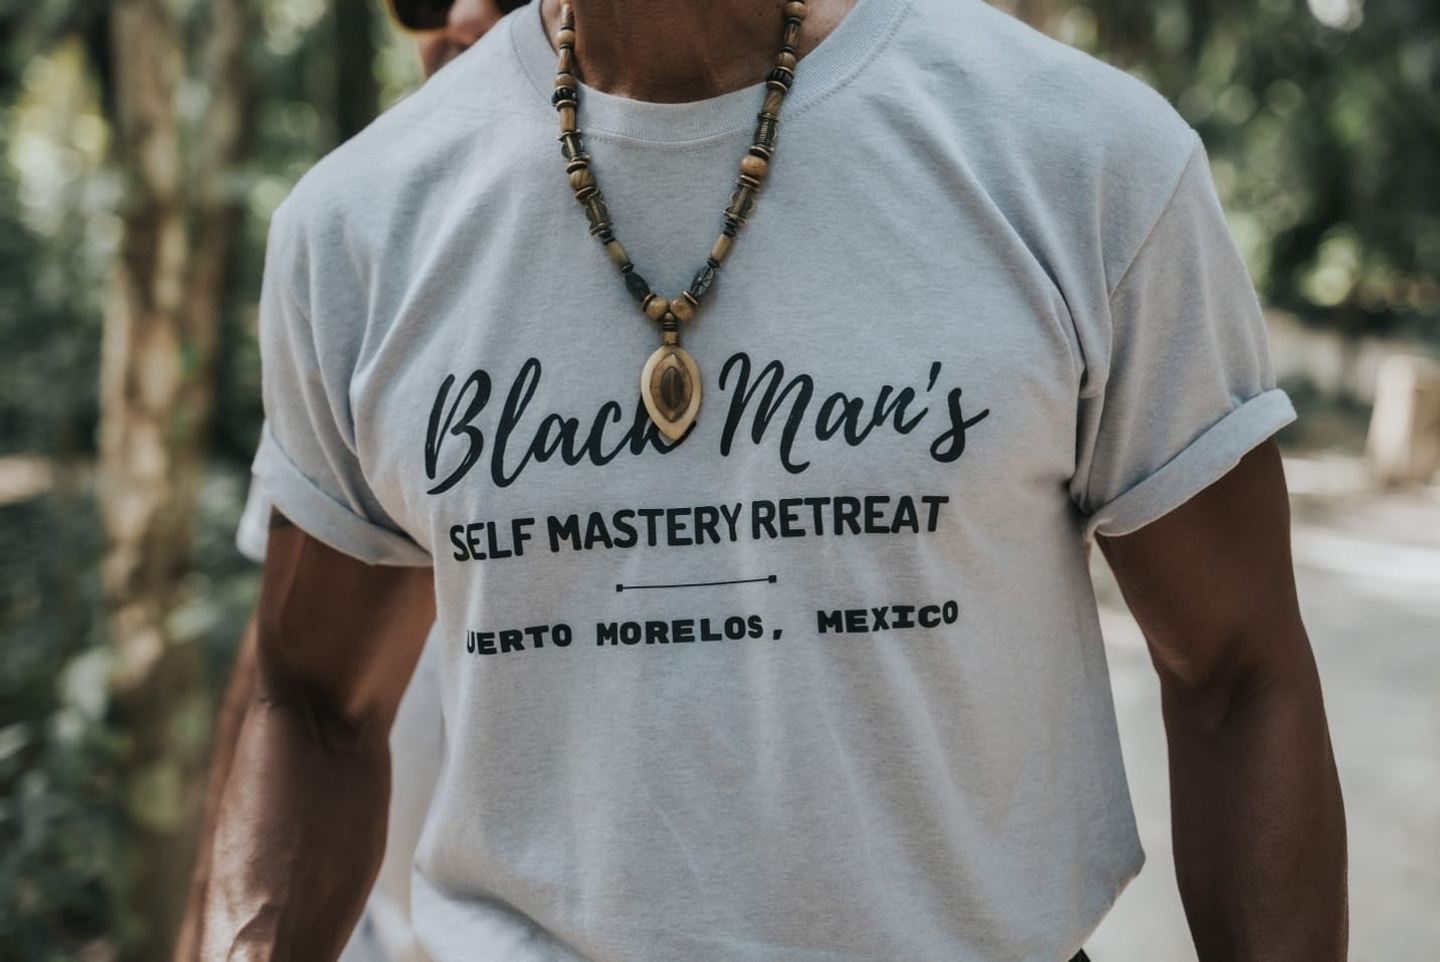 The Black Man's Self Mastery Retreat